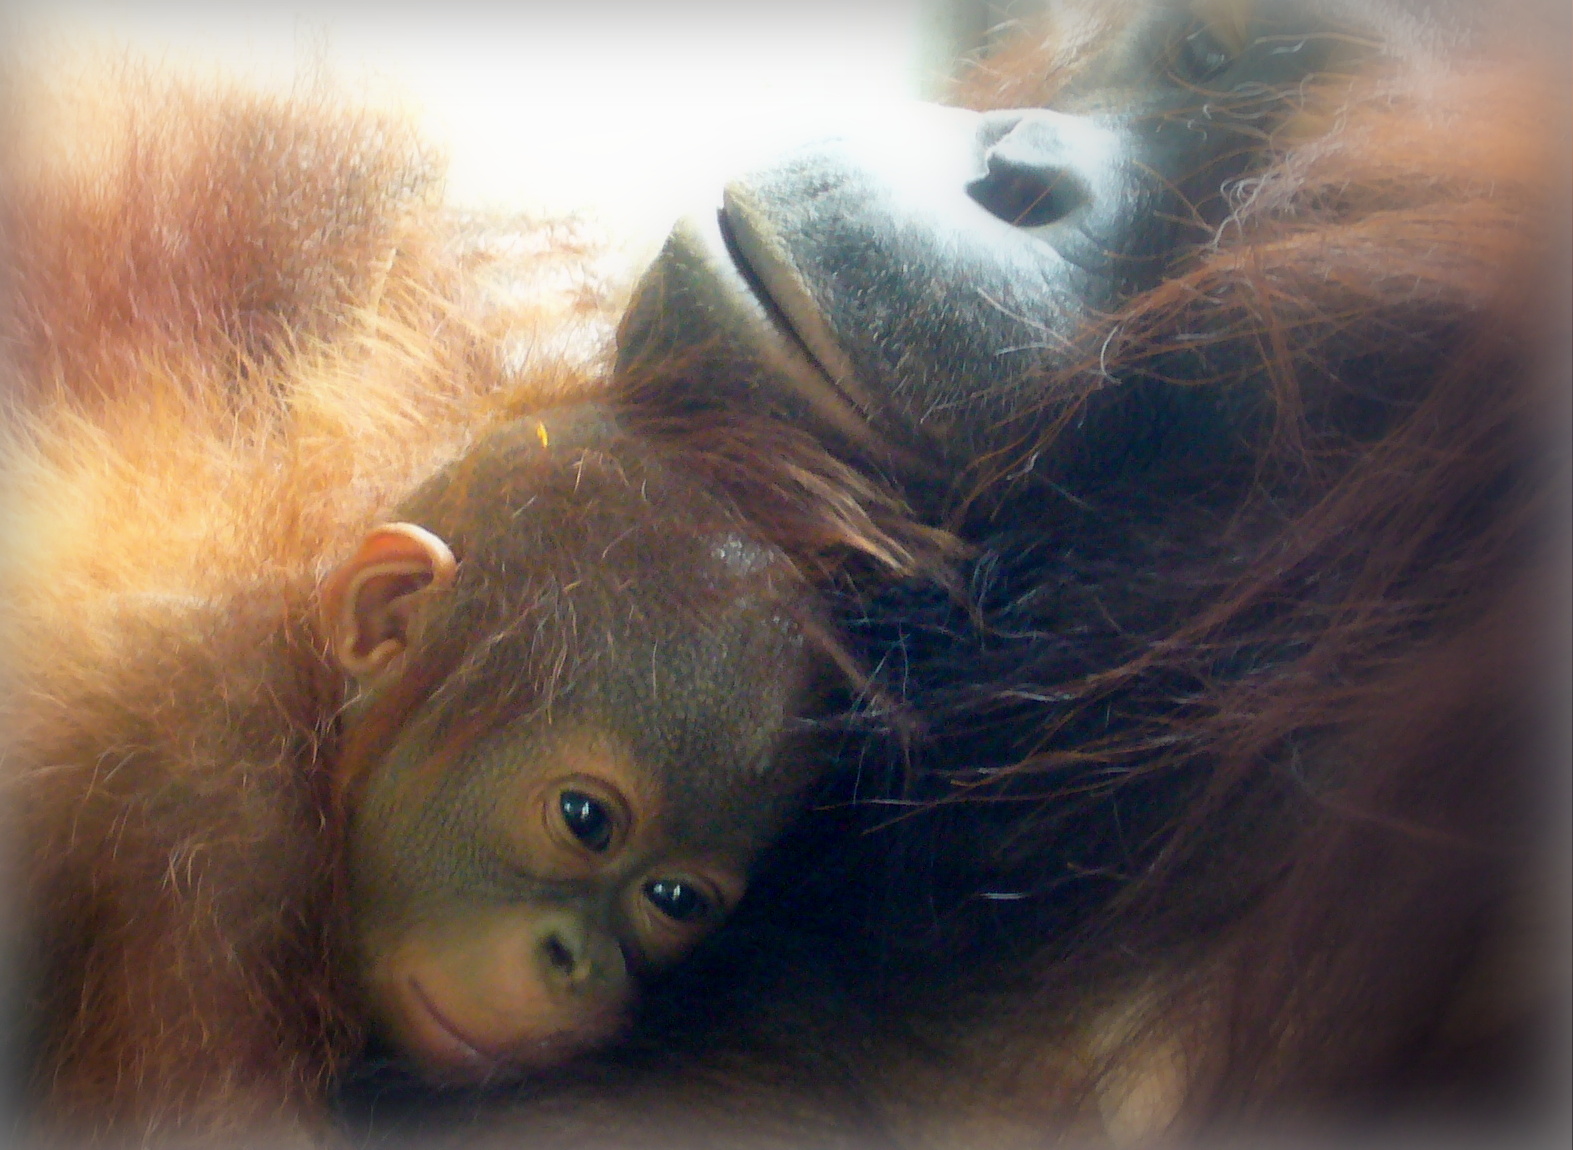 Can palm oil save  orangutans  Sustainable Palm Oil Choice